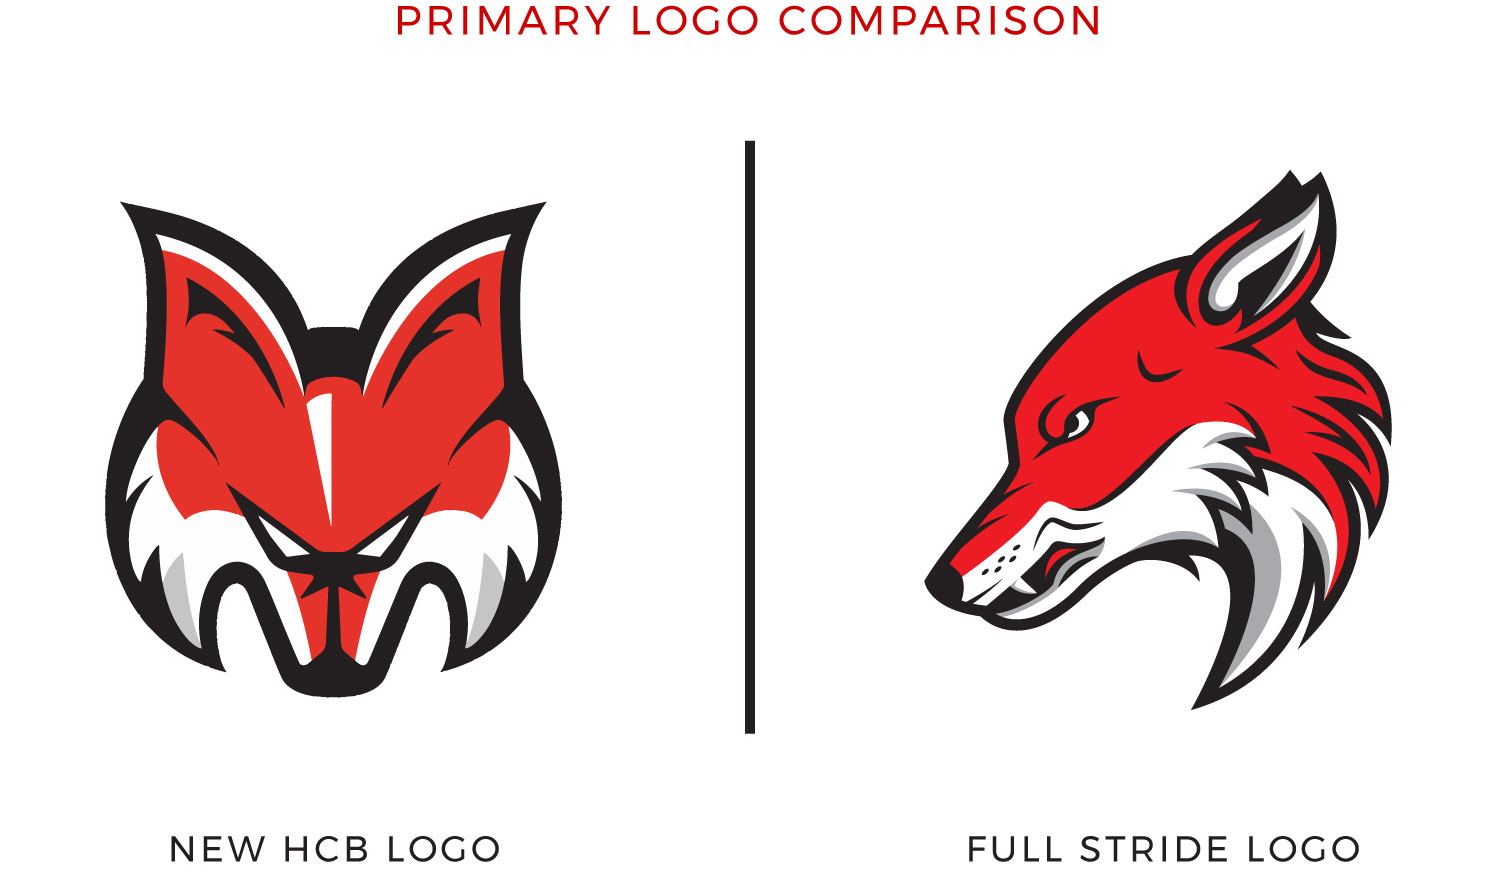 HCB_Foxes_Logo-Comparison-Primary.jpg